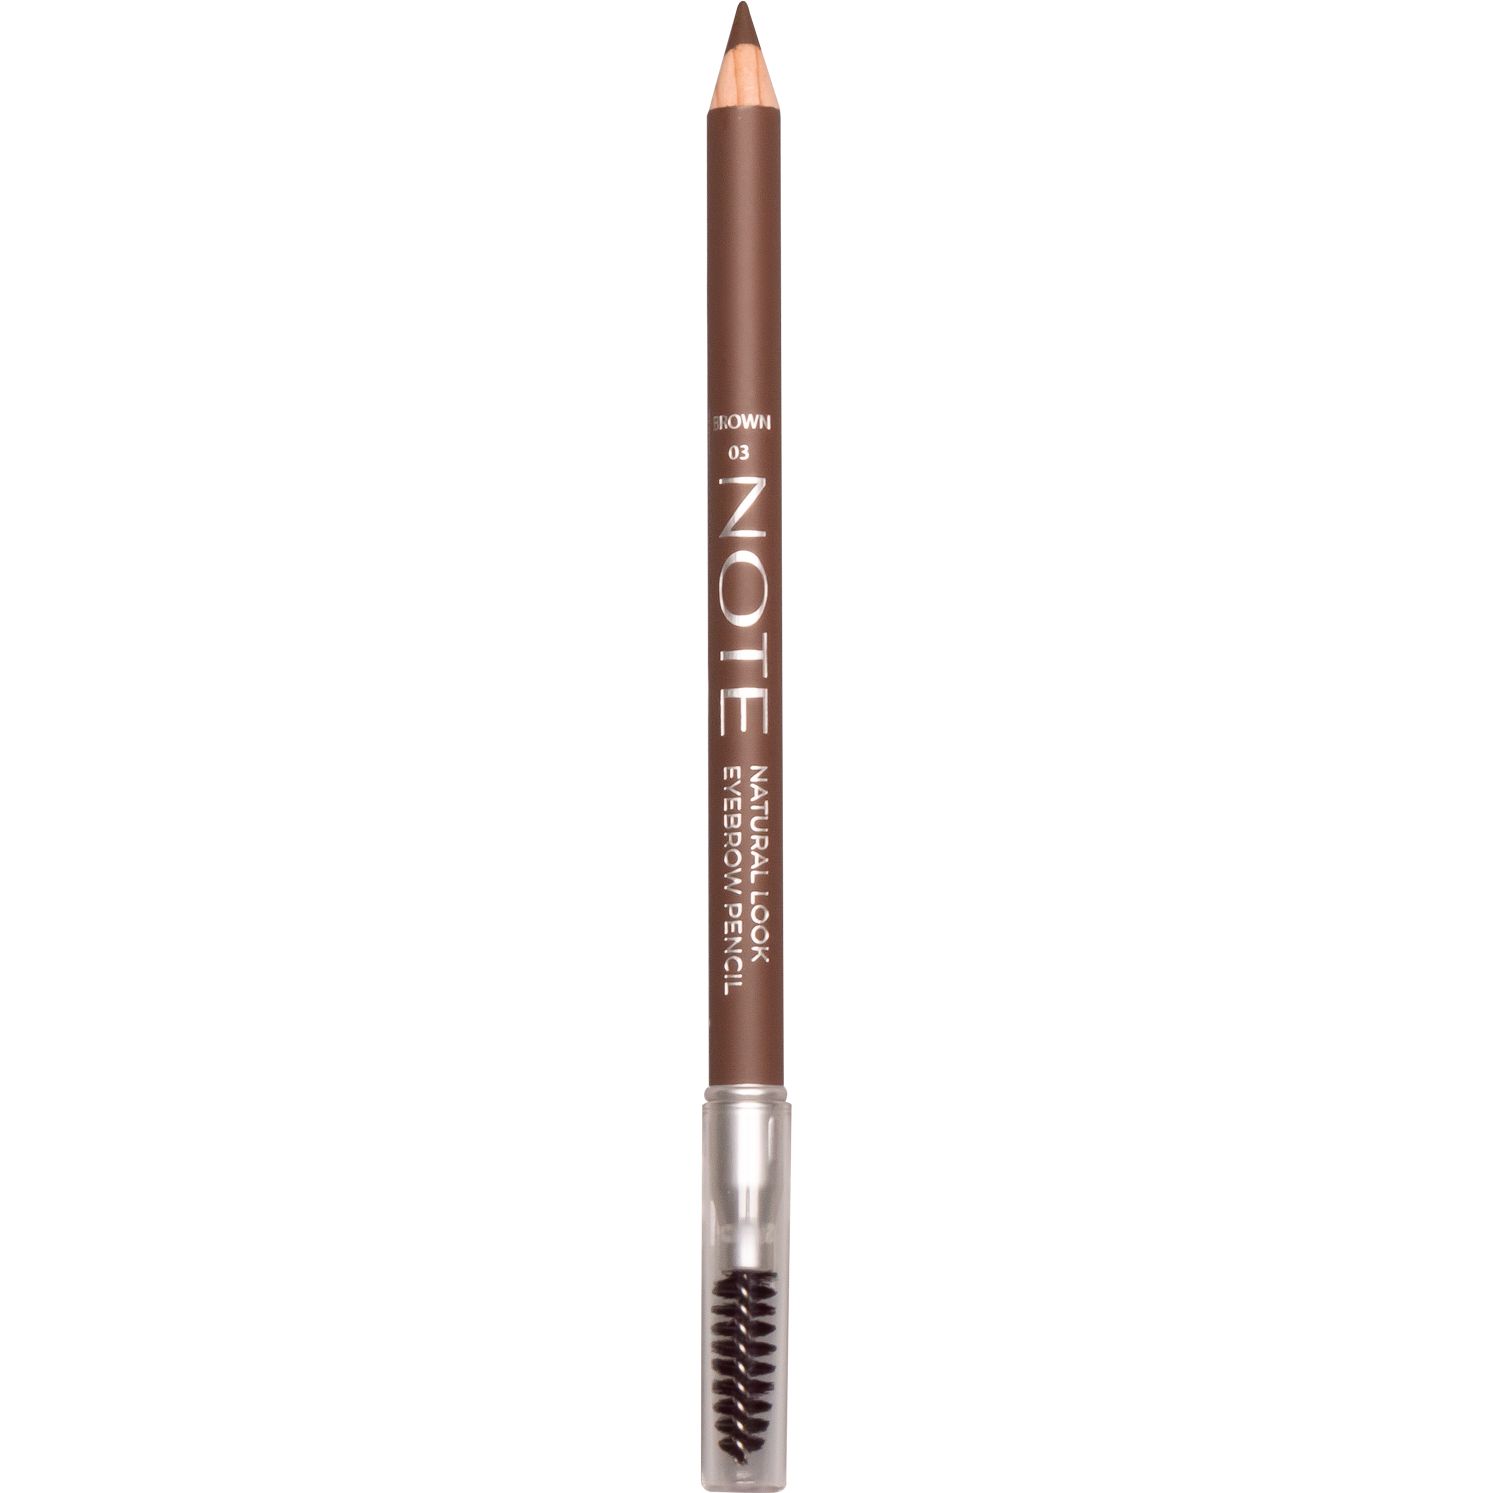 Карандаш для бровей Note Cosmetique Natural Look Eyebrow Pencil Brown тон 3, 1.08 г - фото 2